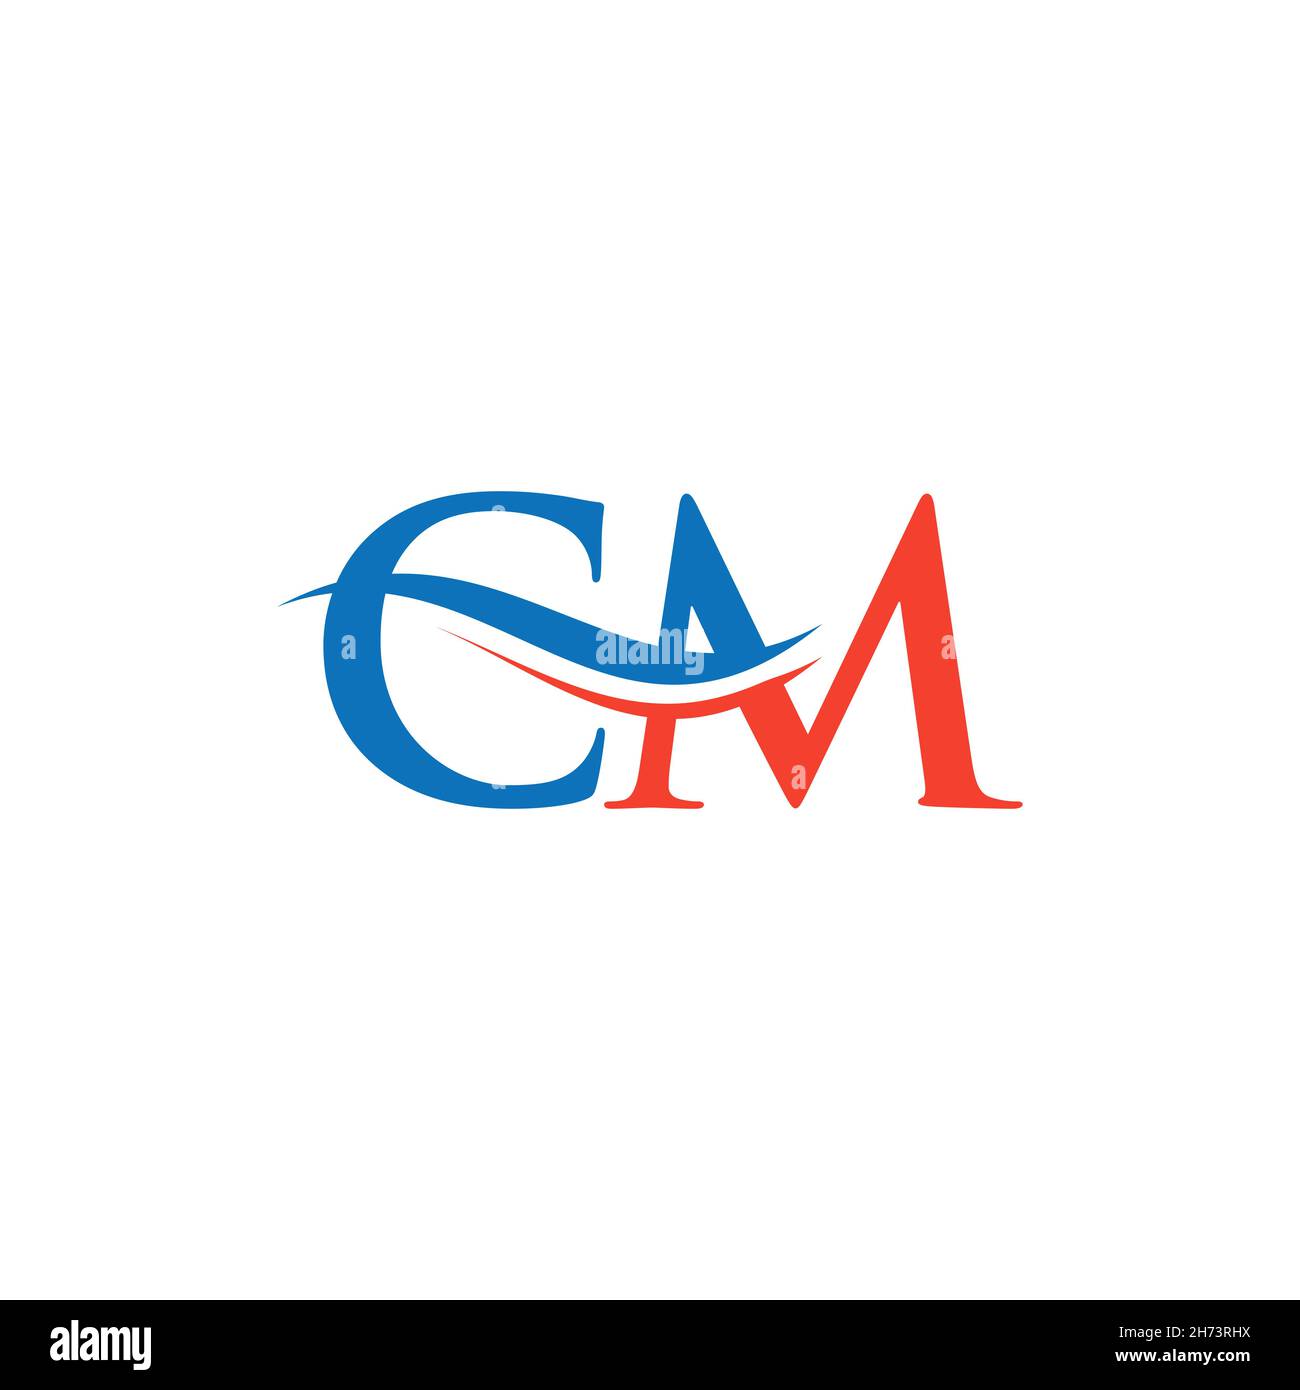 GM Creative Modern Logo Design Vetor with Orange and Black Colors. Monogram  Stroke Letter Design Stock Vector Image & Art - Alamy